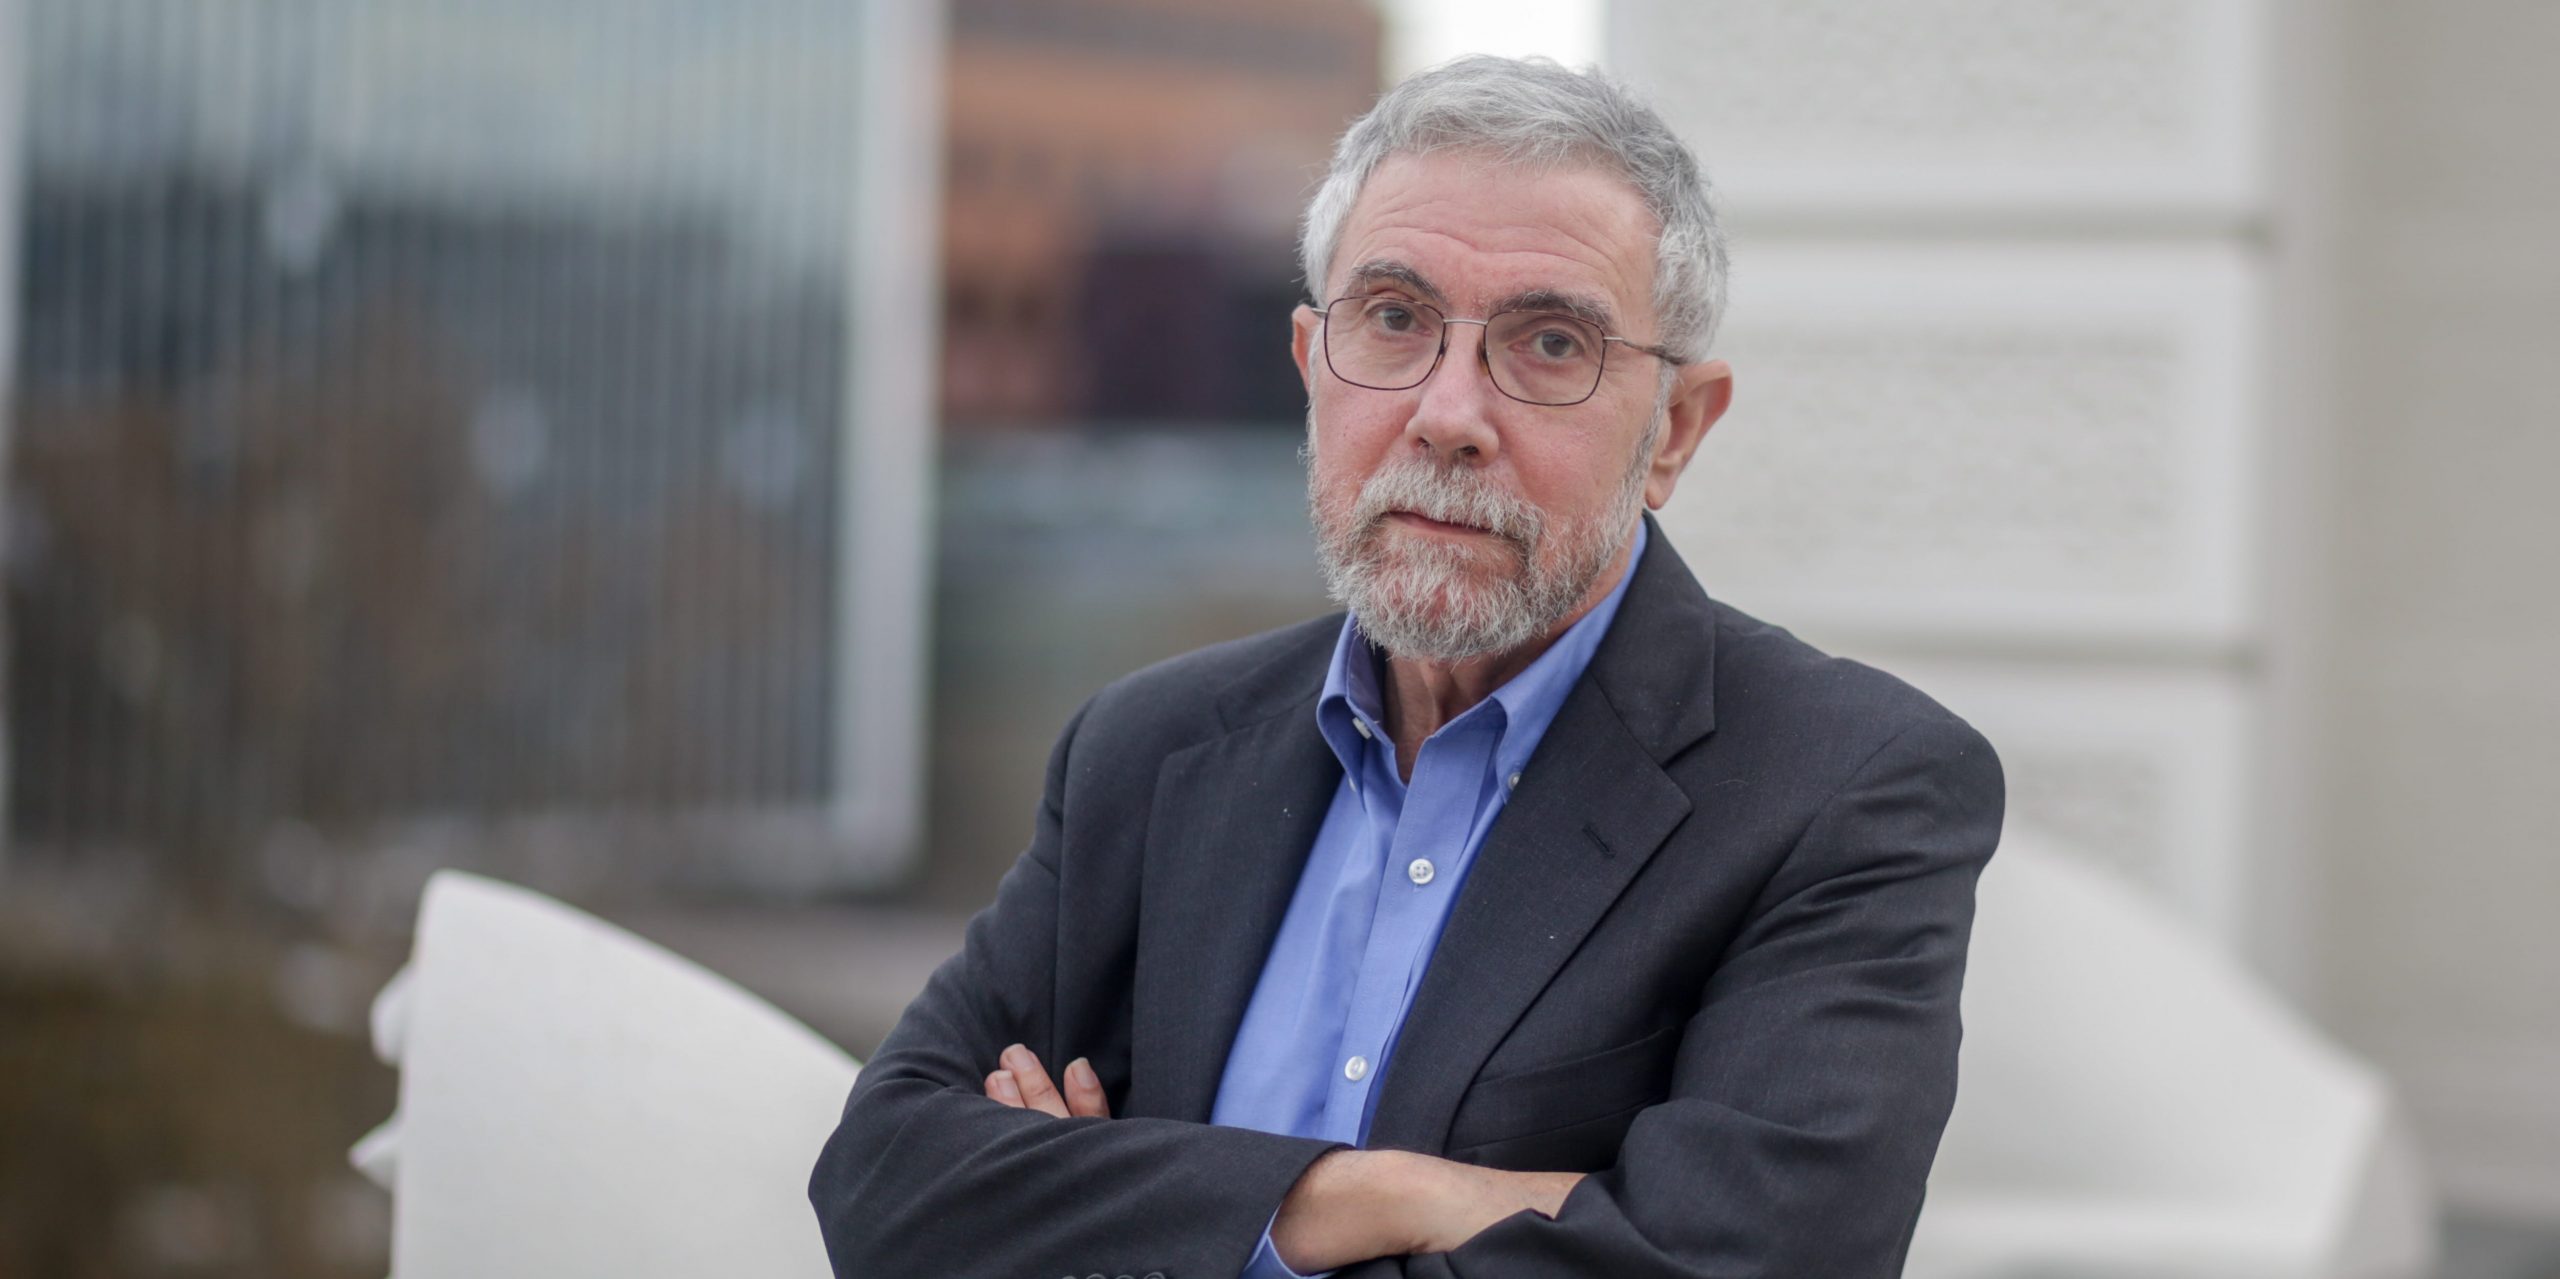 Economist Paul Krugman at the Rafael del Pino Foundation on February 17, 2020 in Madrid, Spain.